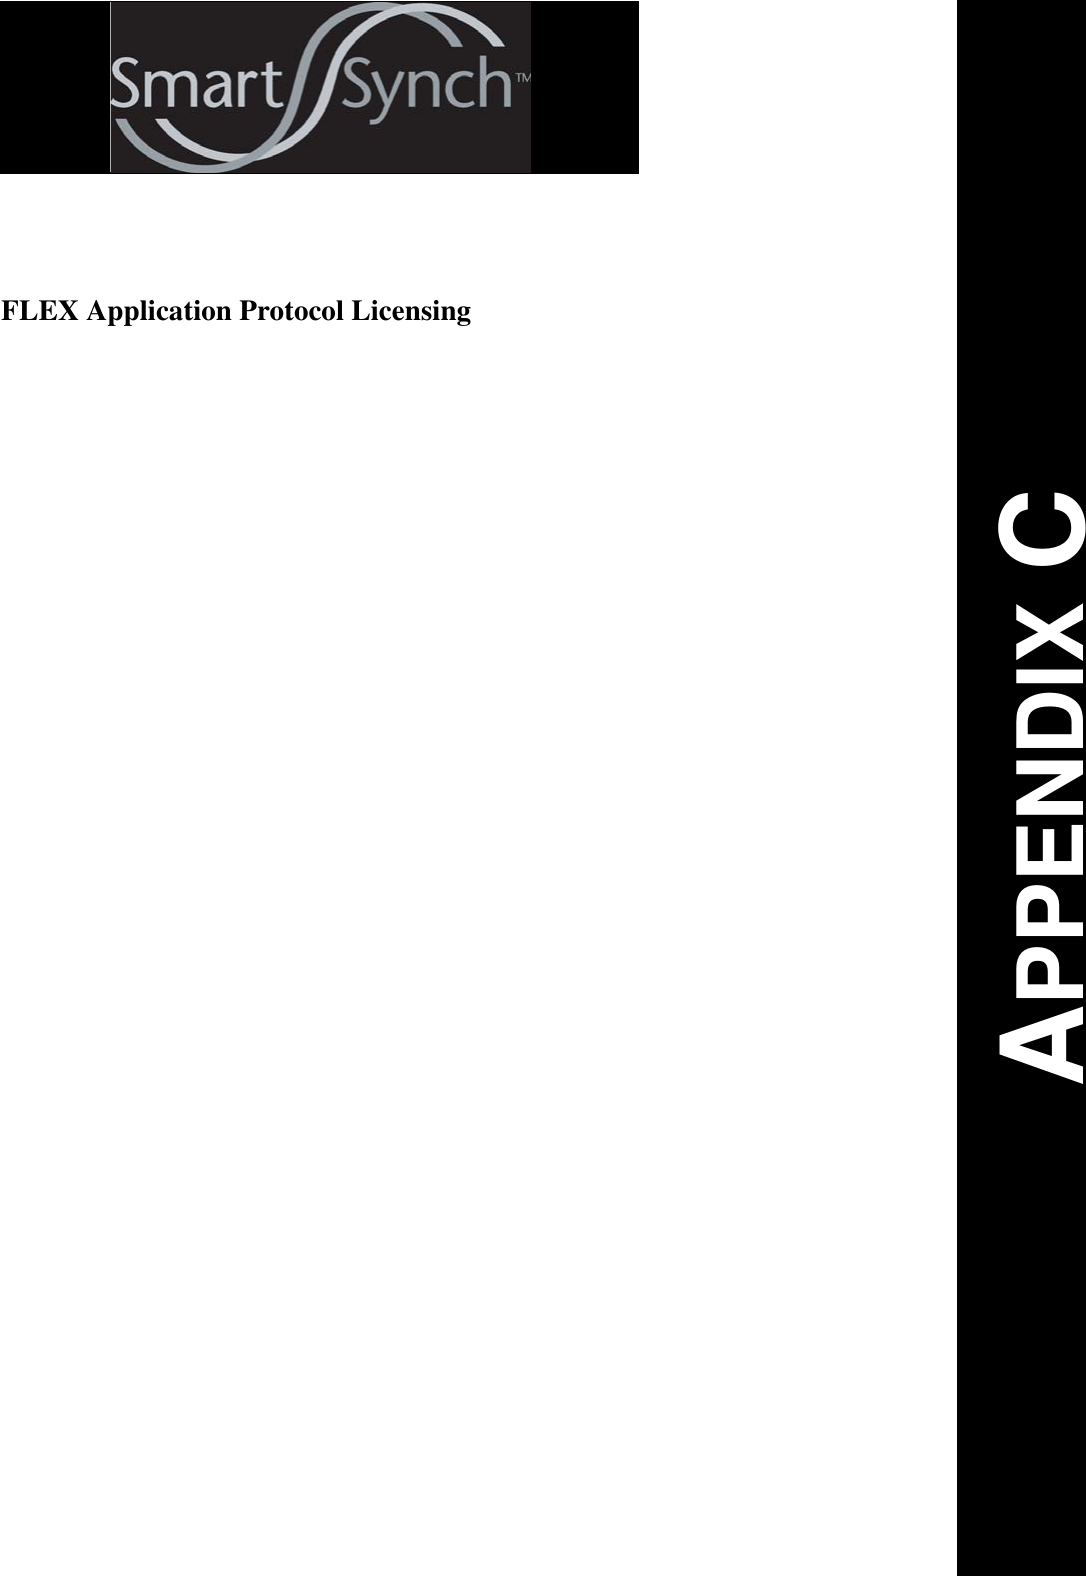 APPENDIX CFLEX Application Protocol Licensing